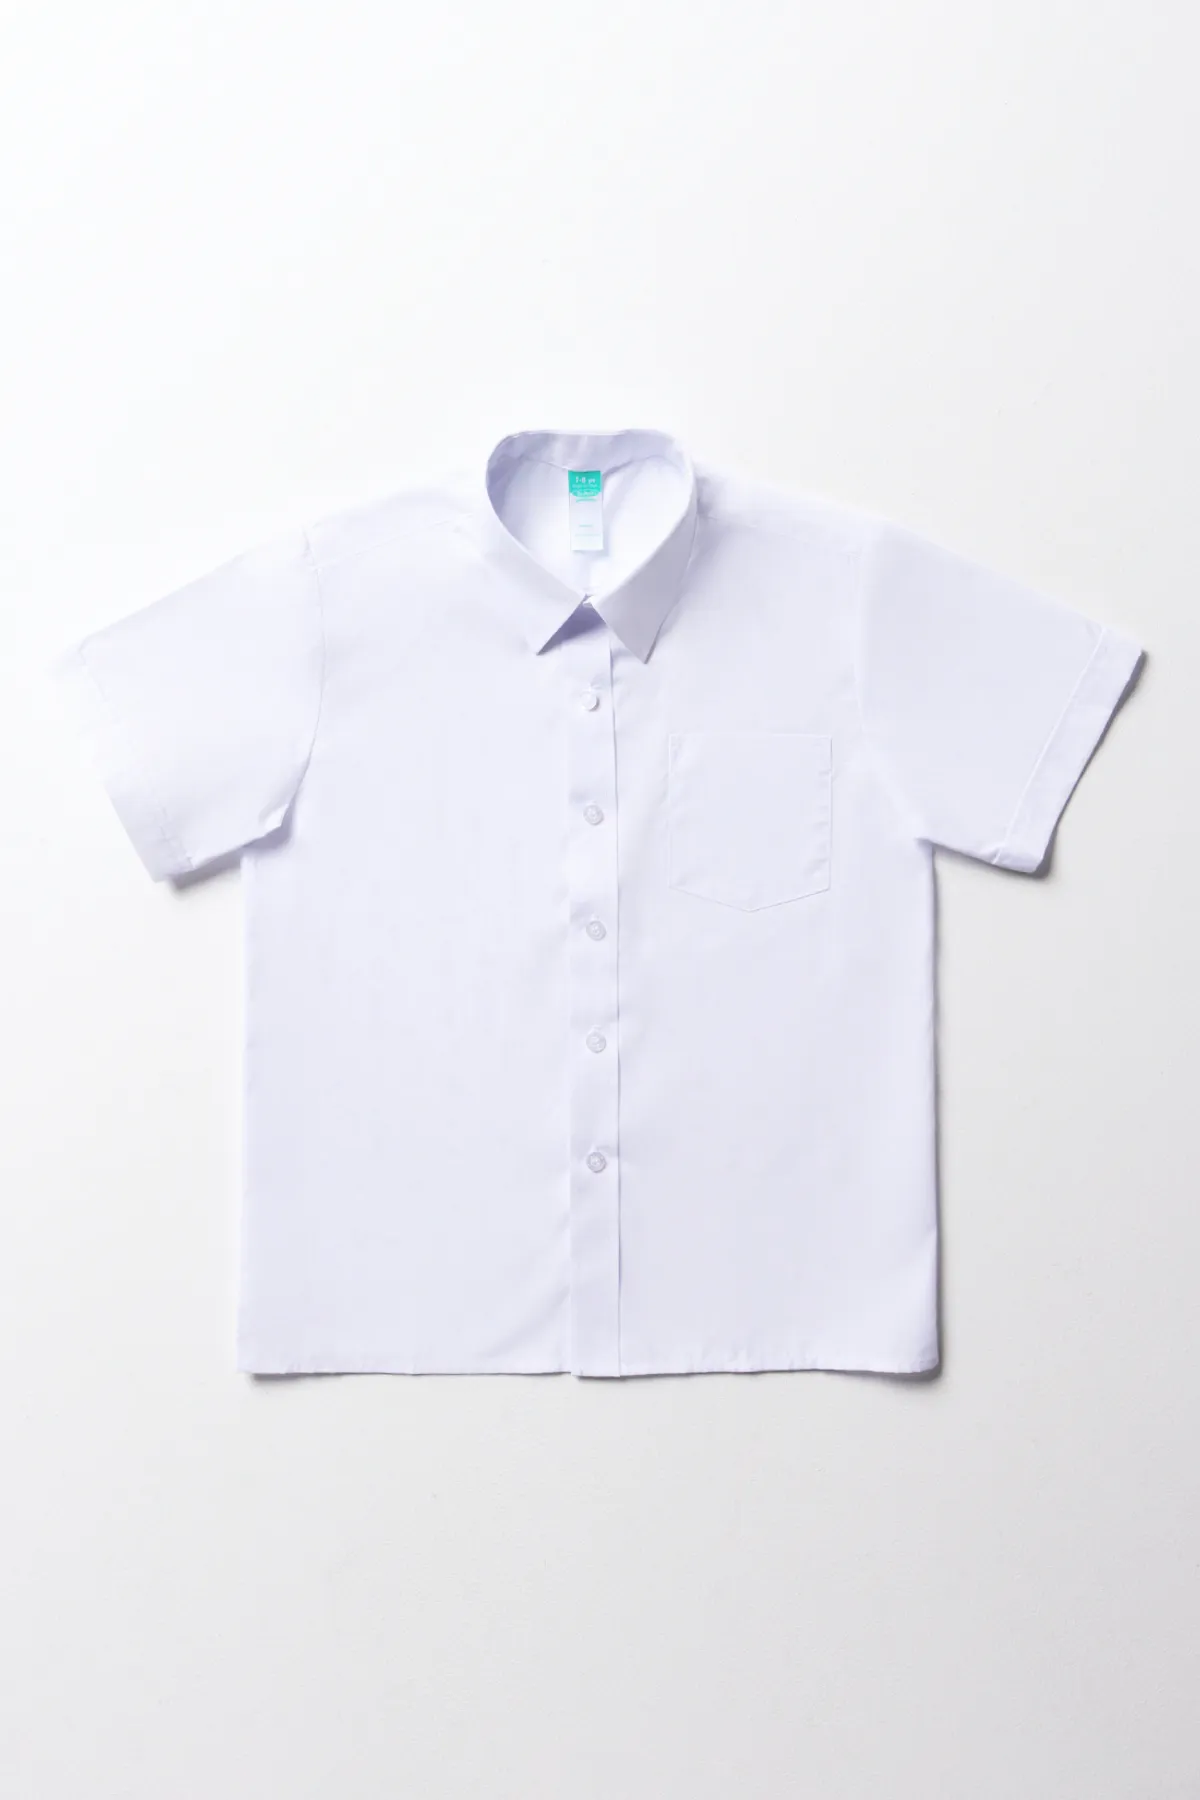 Unisex short sleeve collar shirt white - Kids's School Clothes